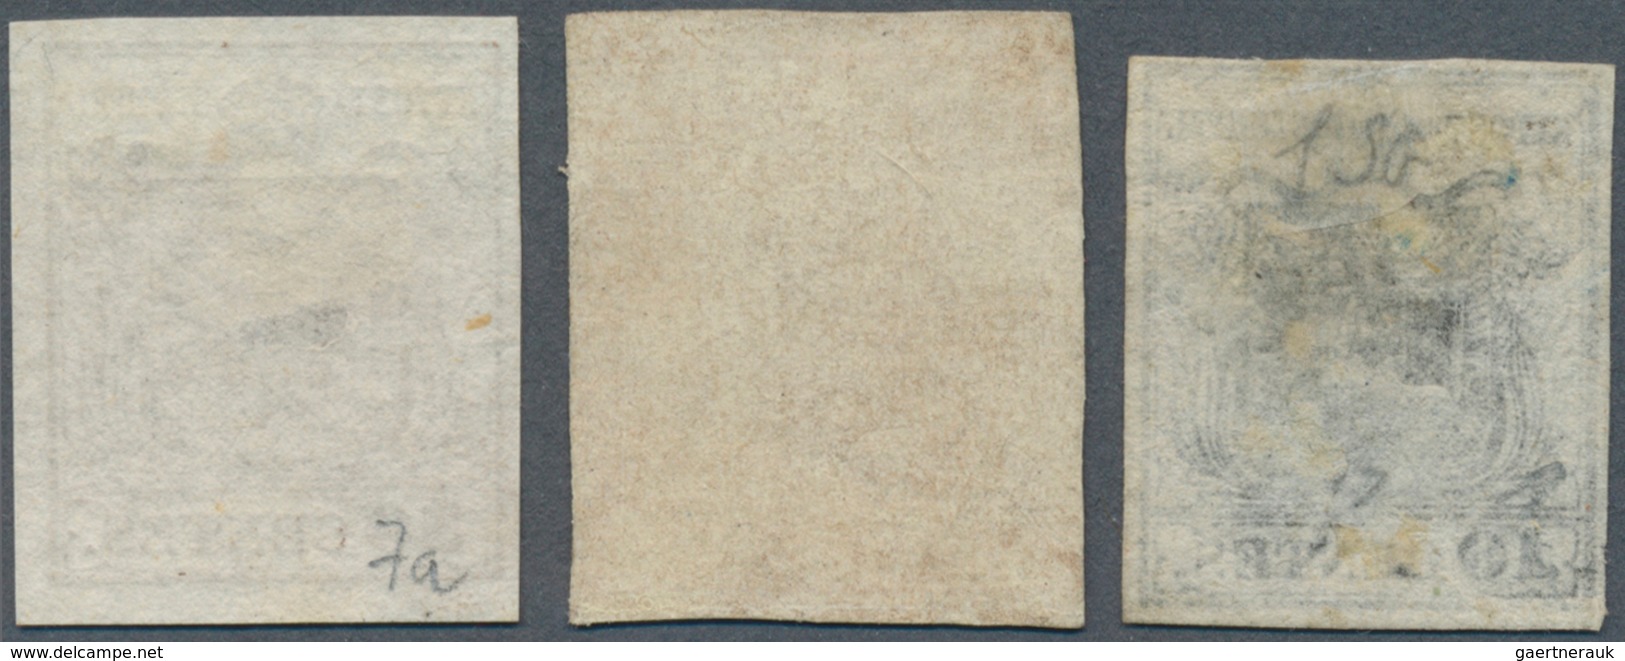 Österreich - Lombardei Und Venetien: 1850, 10 C Schwarz, 15 C Rot U. 30 C Braun, Je Handpapier In Ty - Lombardy-Venetia